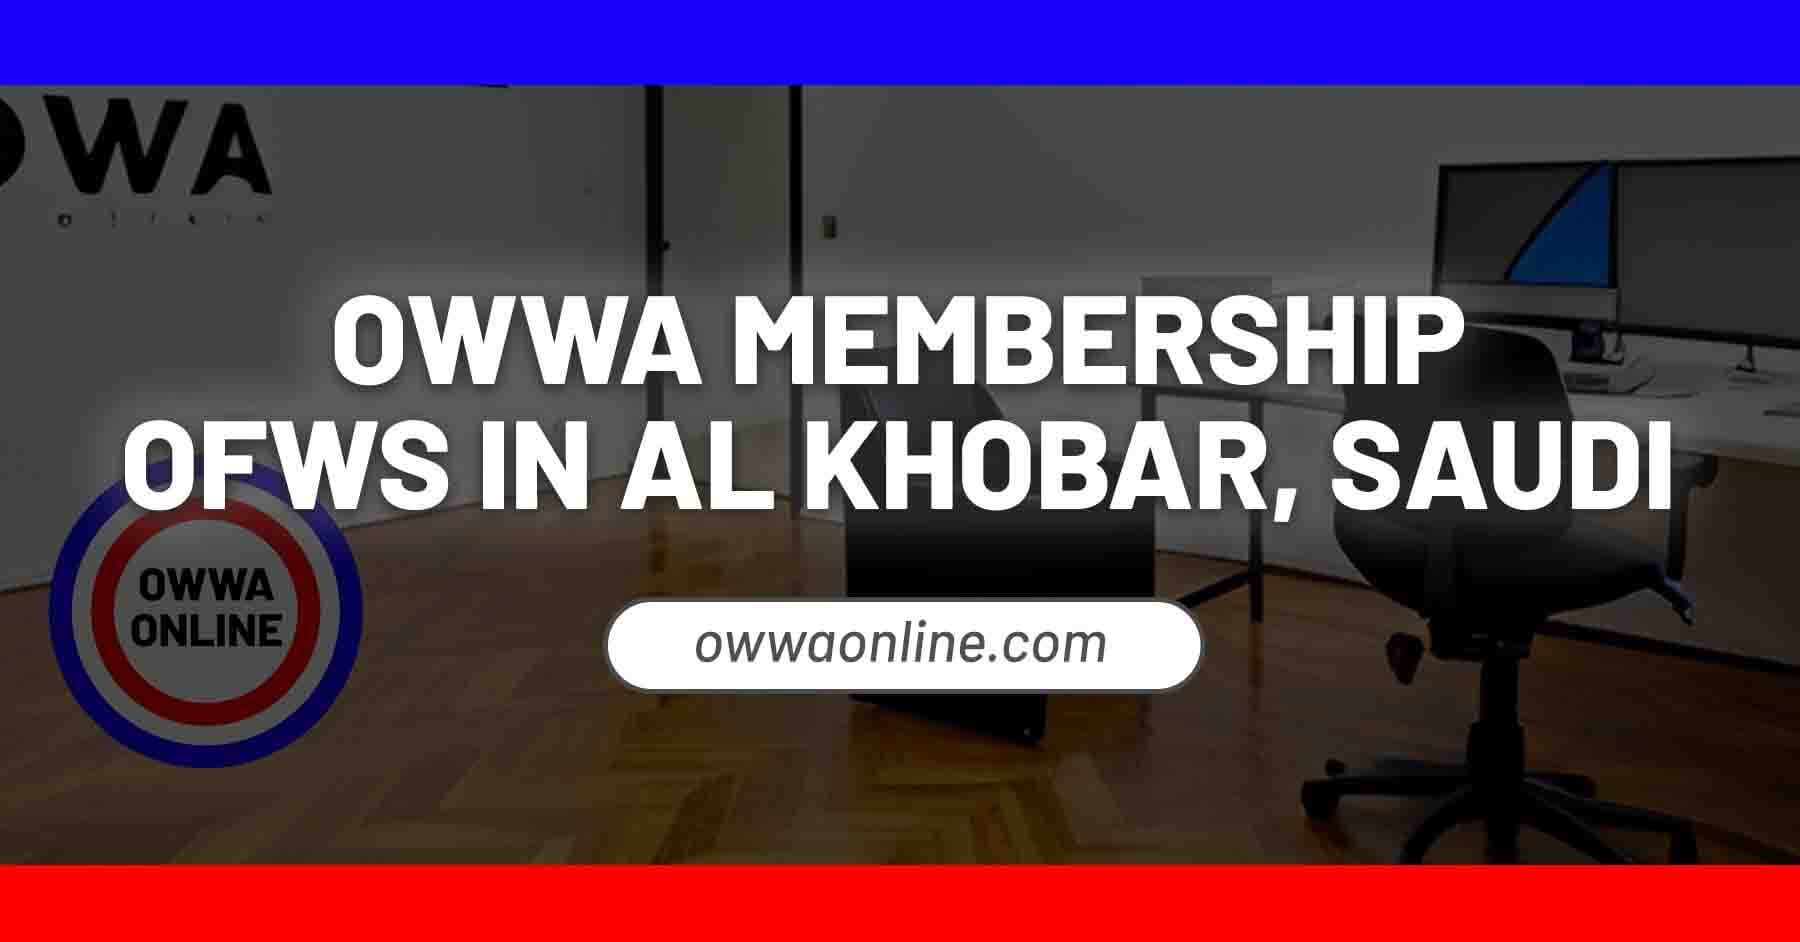 owwa membership application appointment in al khobar saudi arabia